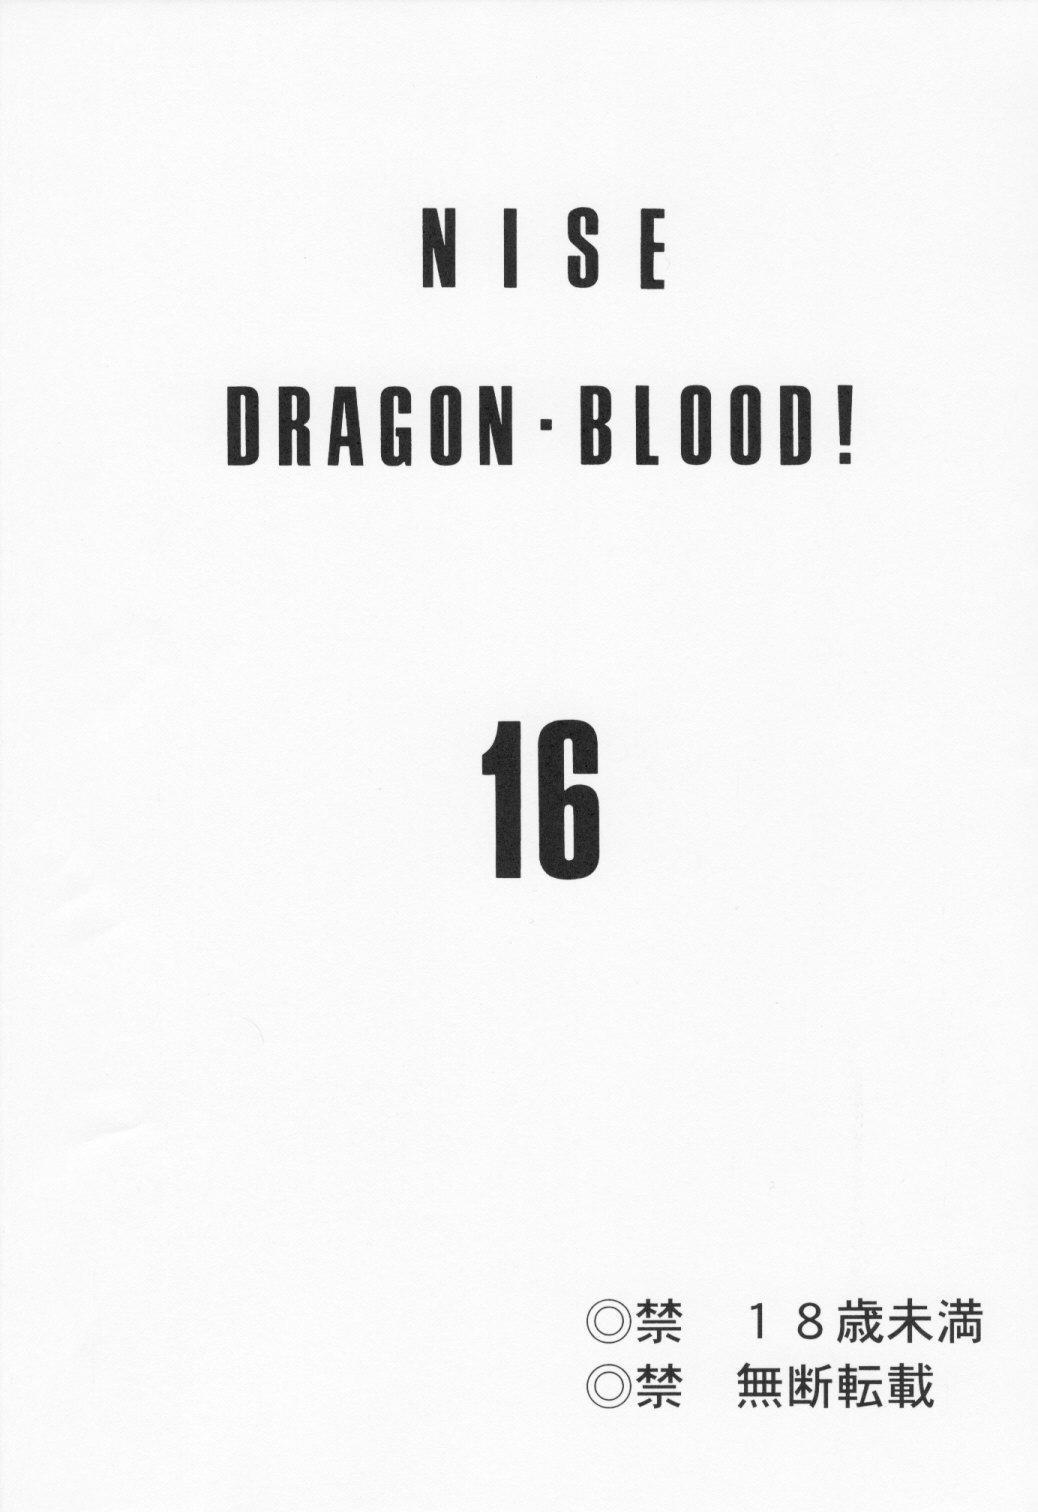 NISE Dragon Blood! 16 2